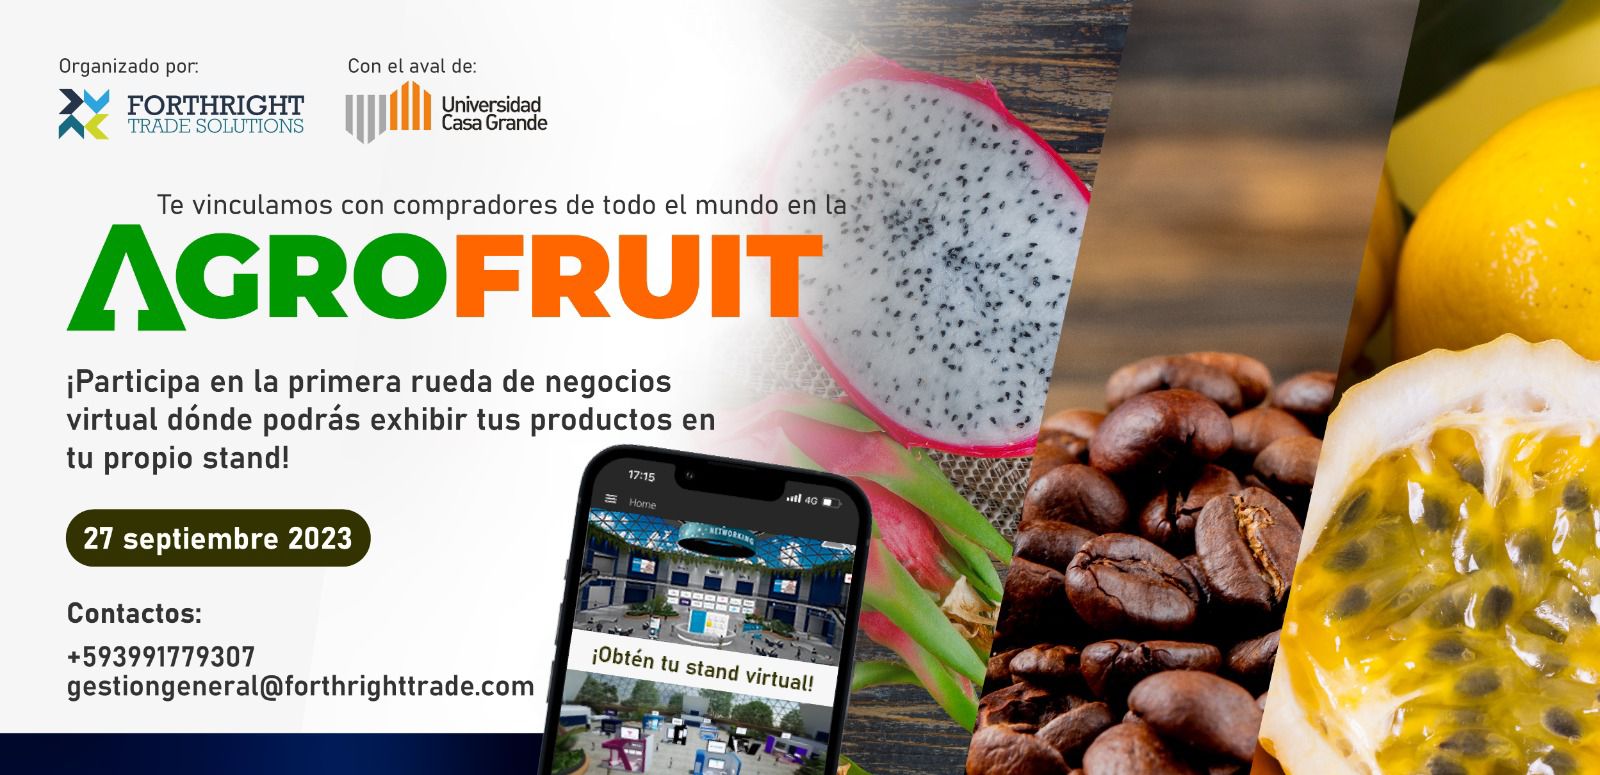 Agrofruit